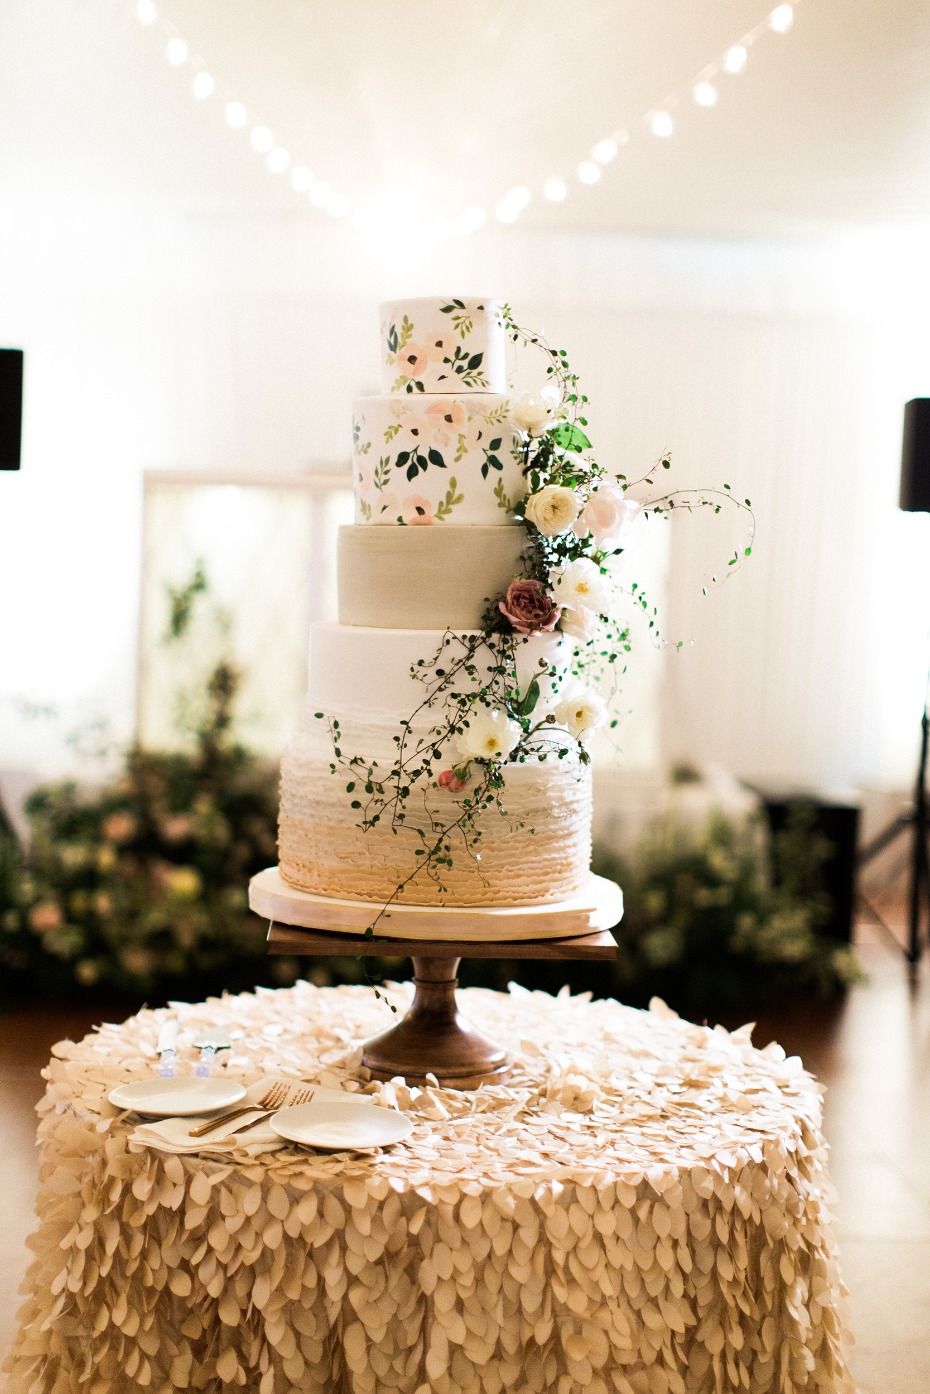 Spring wedding cake inspiration